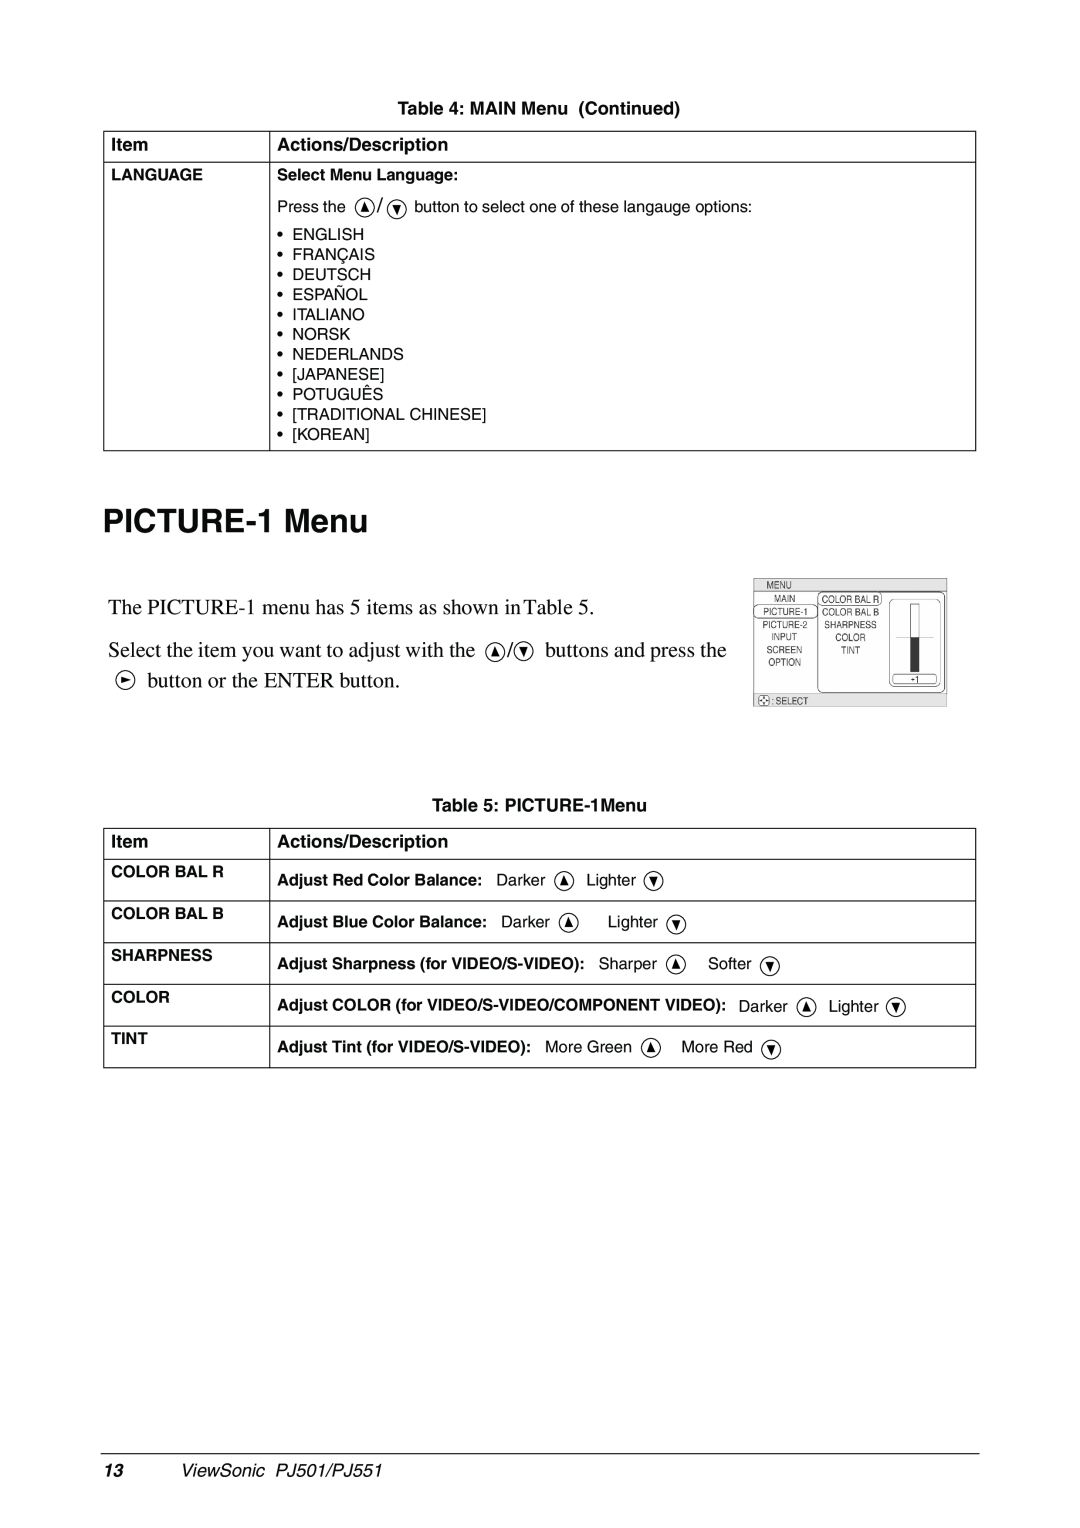 ViewSonic manual PICTURE-1 Menu, The PICTURE-1 menu has 5 items as shown inTable, ViewSonic PJ501/PJ551 